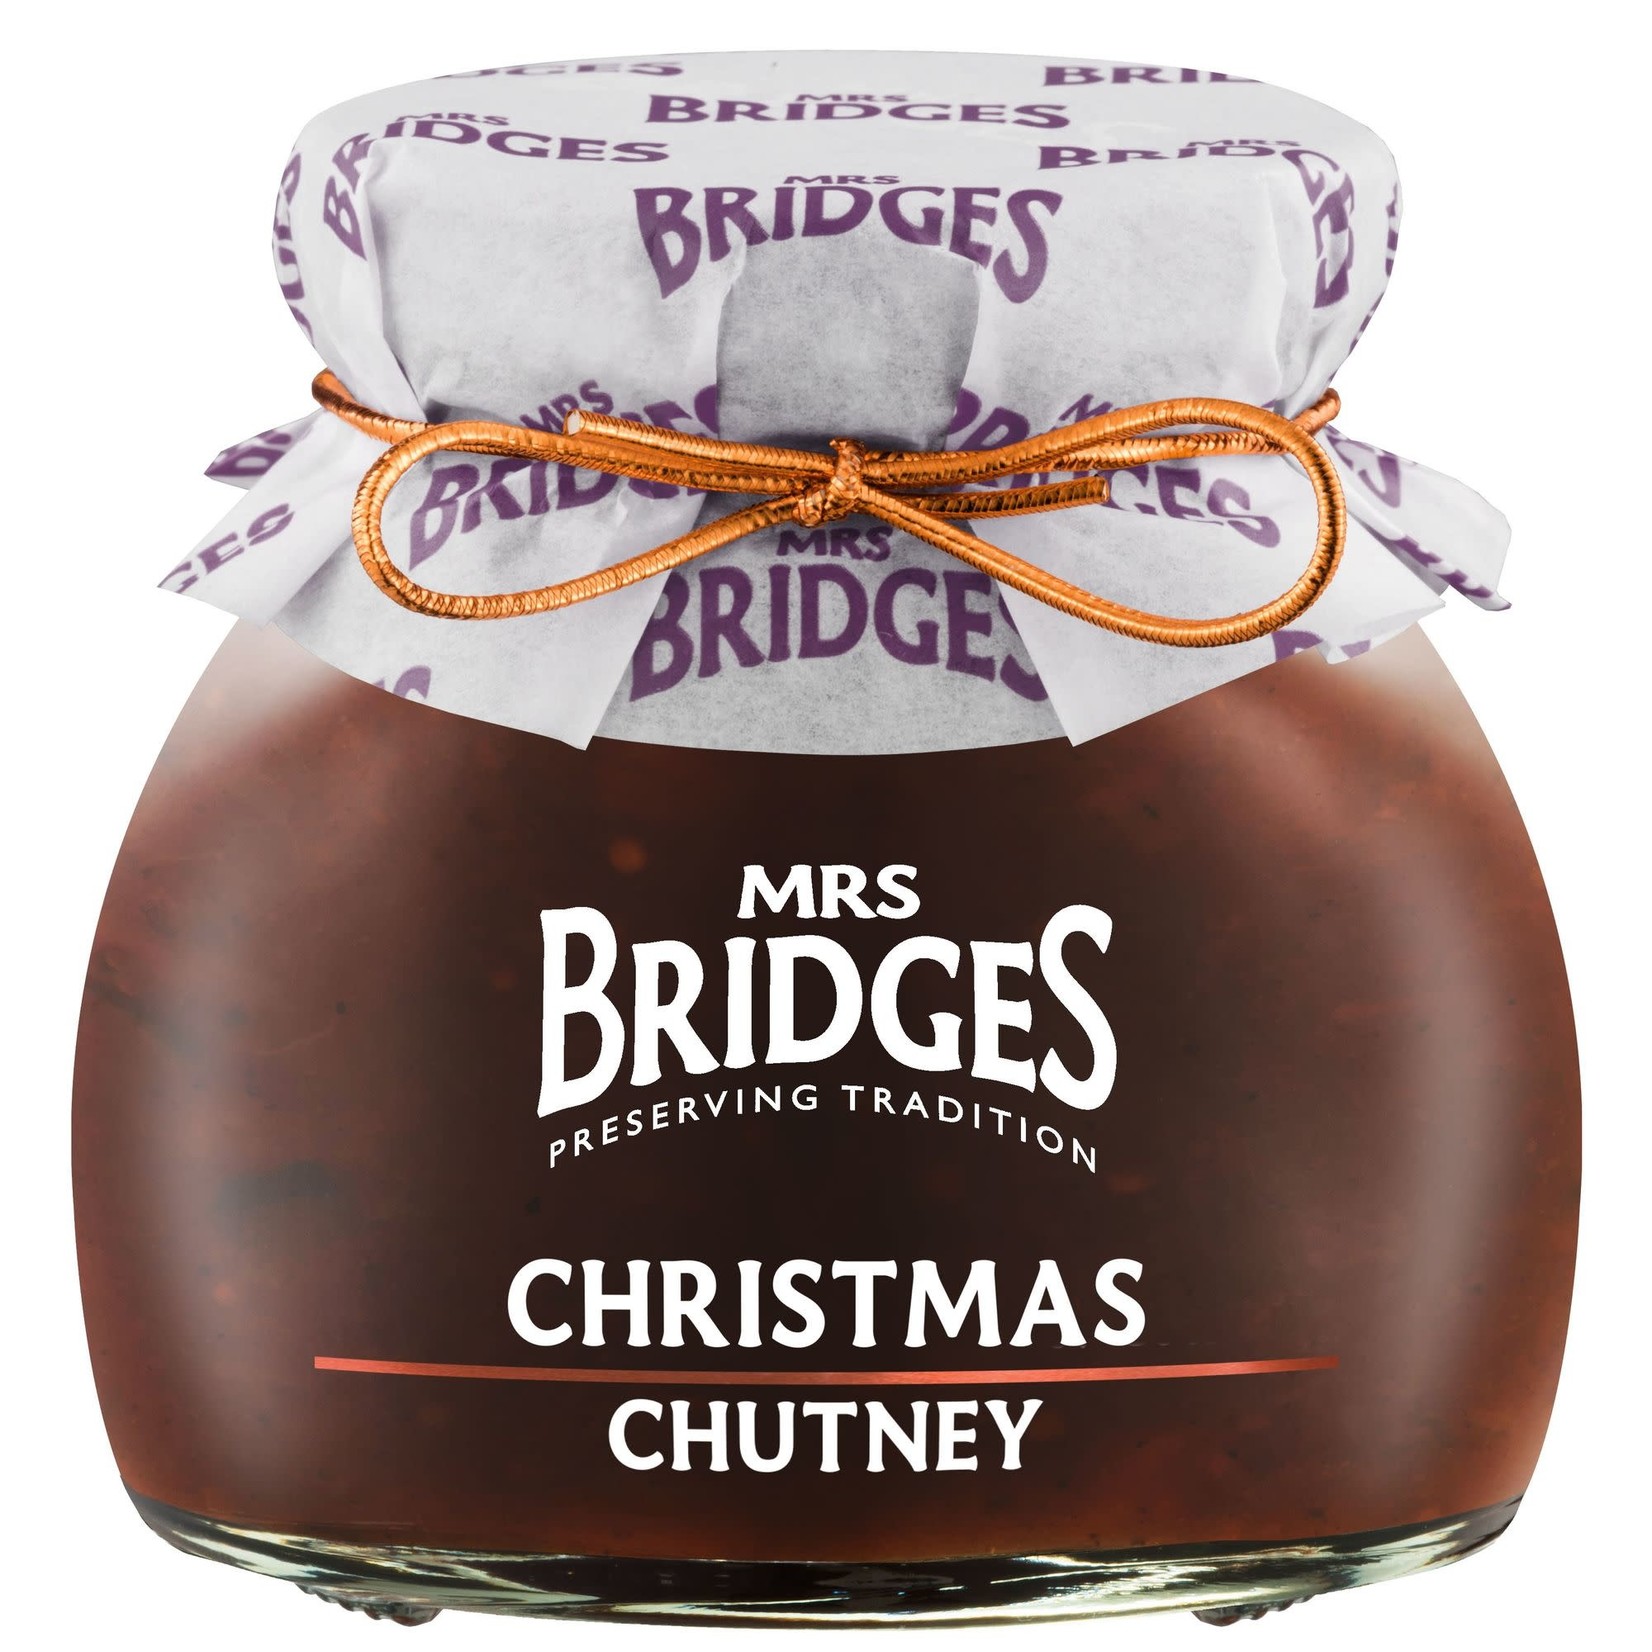 MRS BRIDGES MRS BRIDGES Christmas Chutney 240g